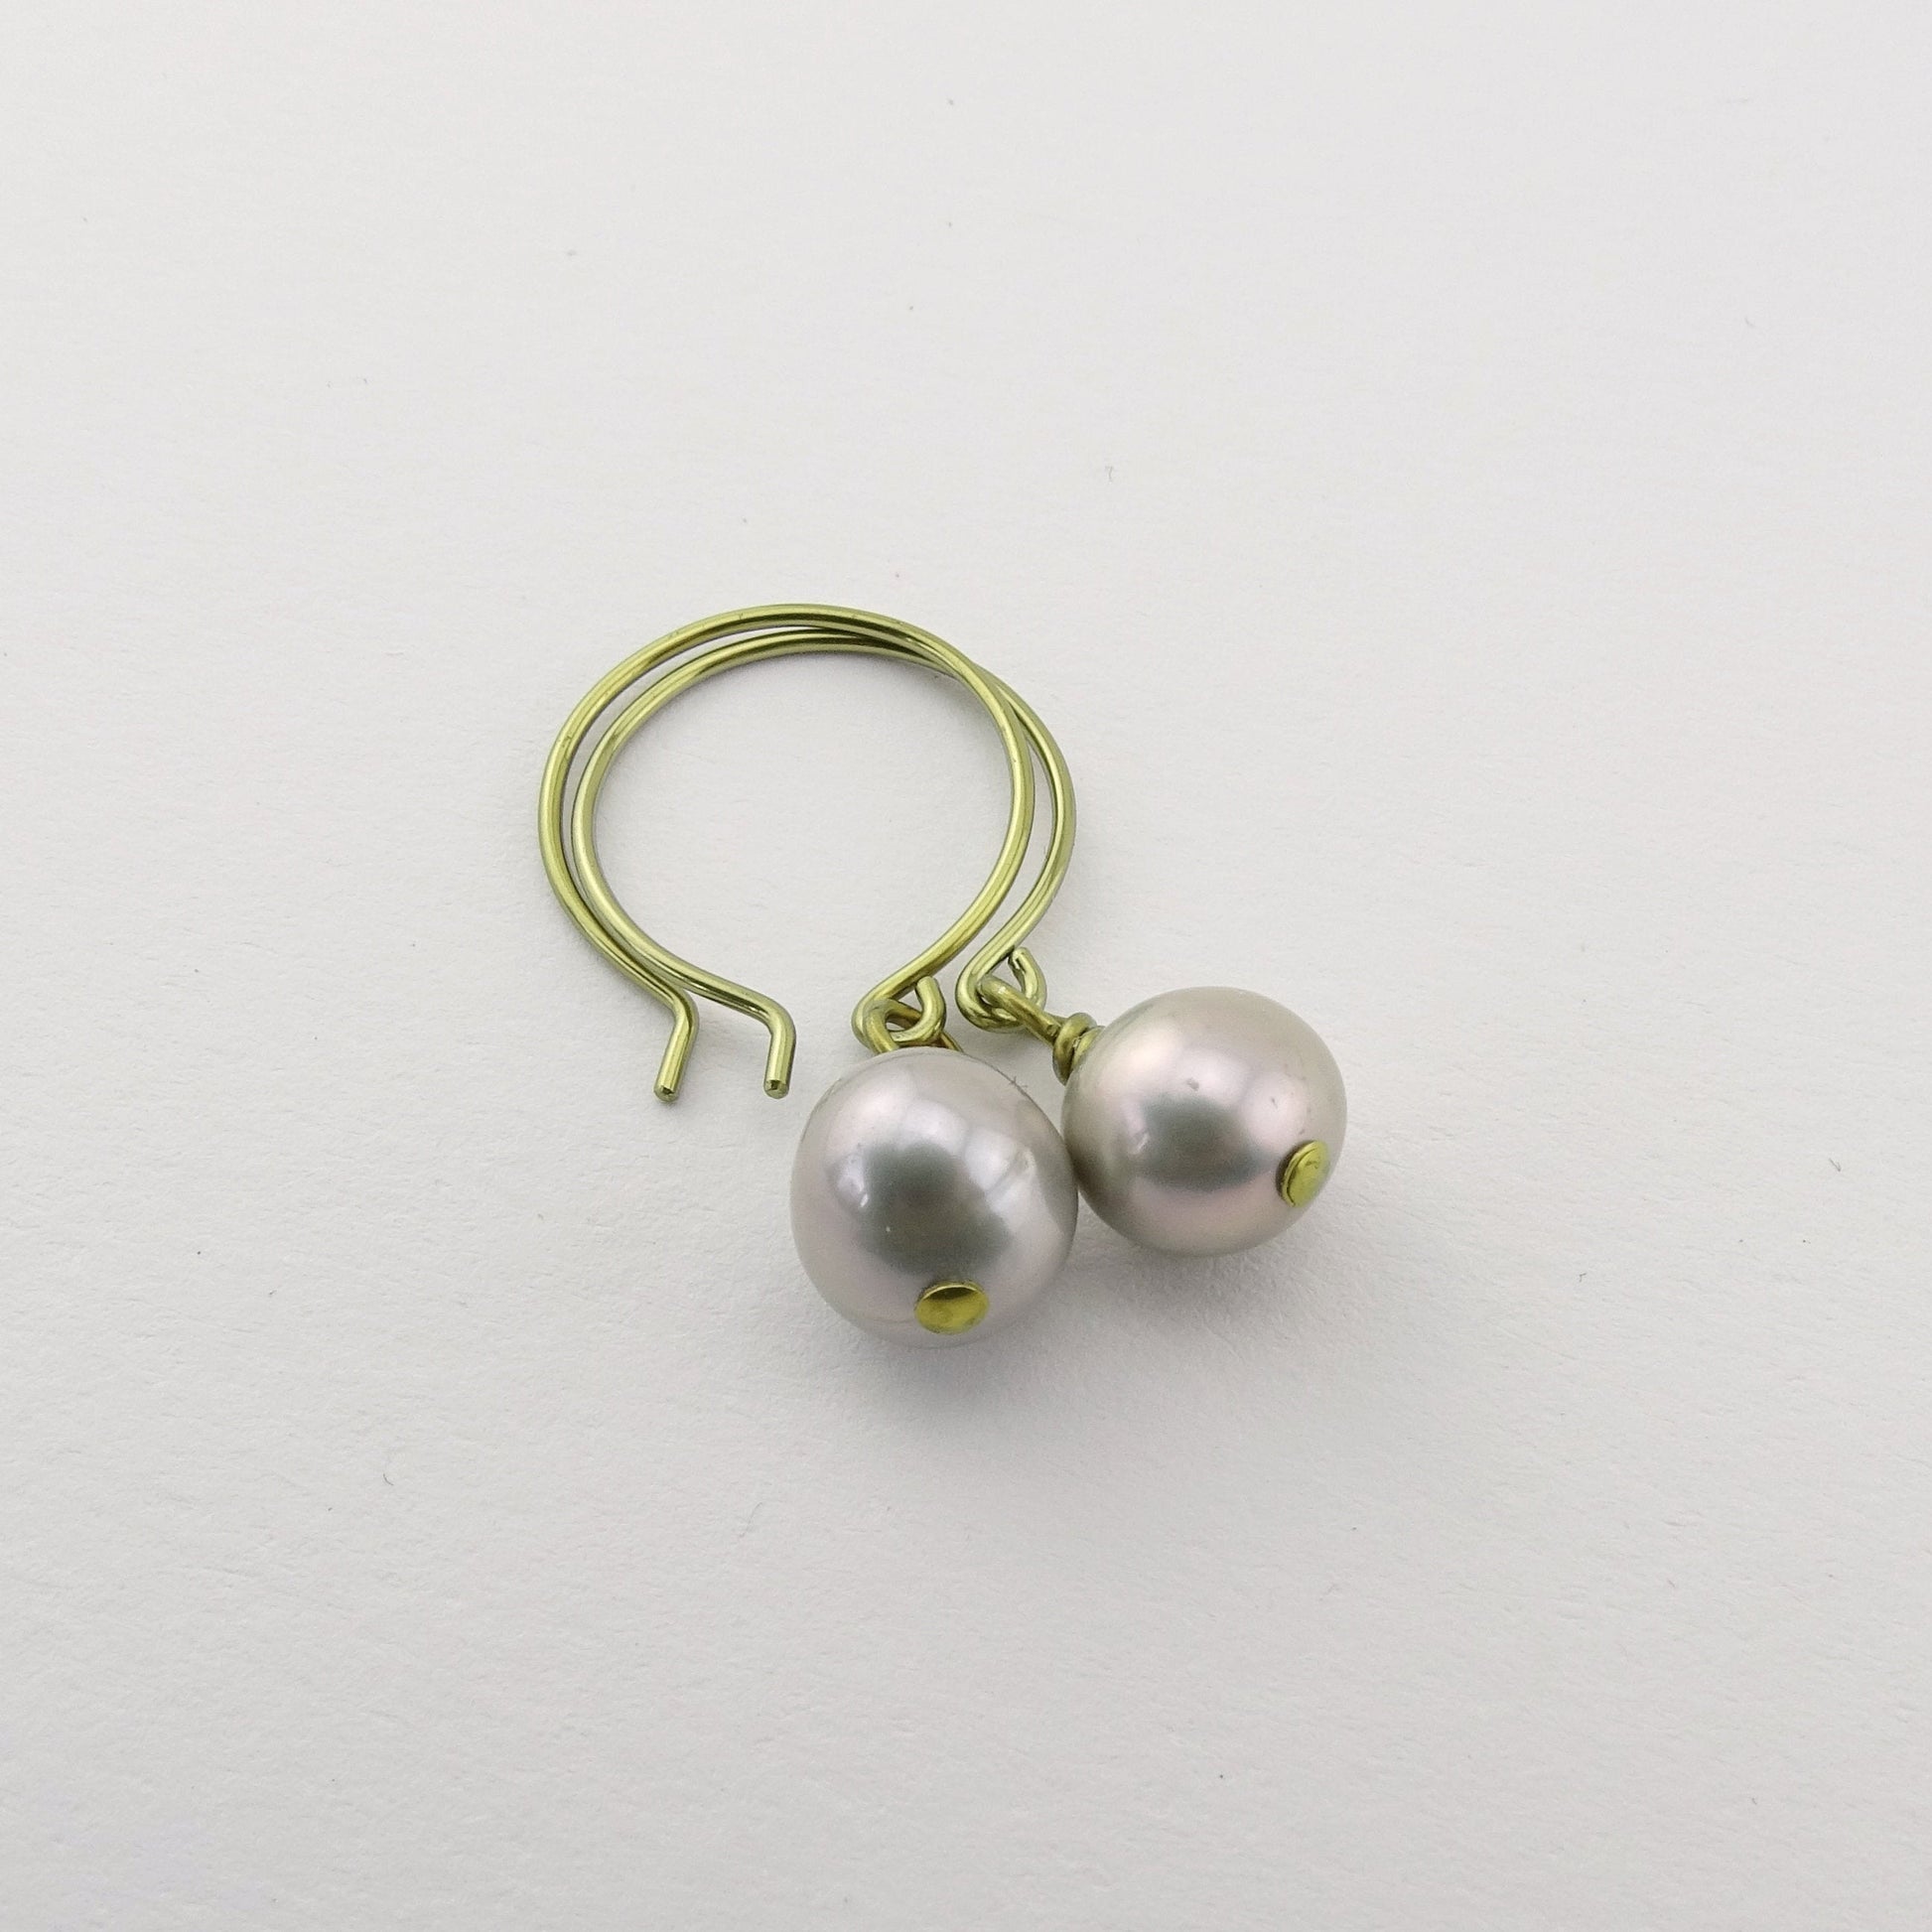 Gray Pearl Earrings, Yellow Gold Niobium Nickel Free Earrings, Freshwater Pearls Hypoallergenic Earrings for Sensitive Ears, Non Allergenic